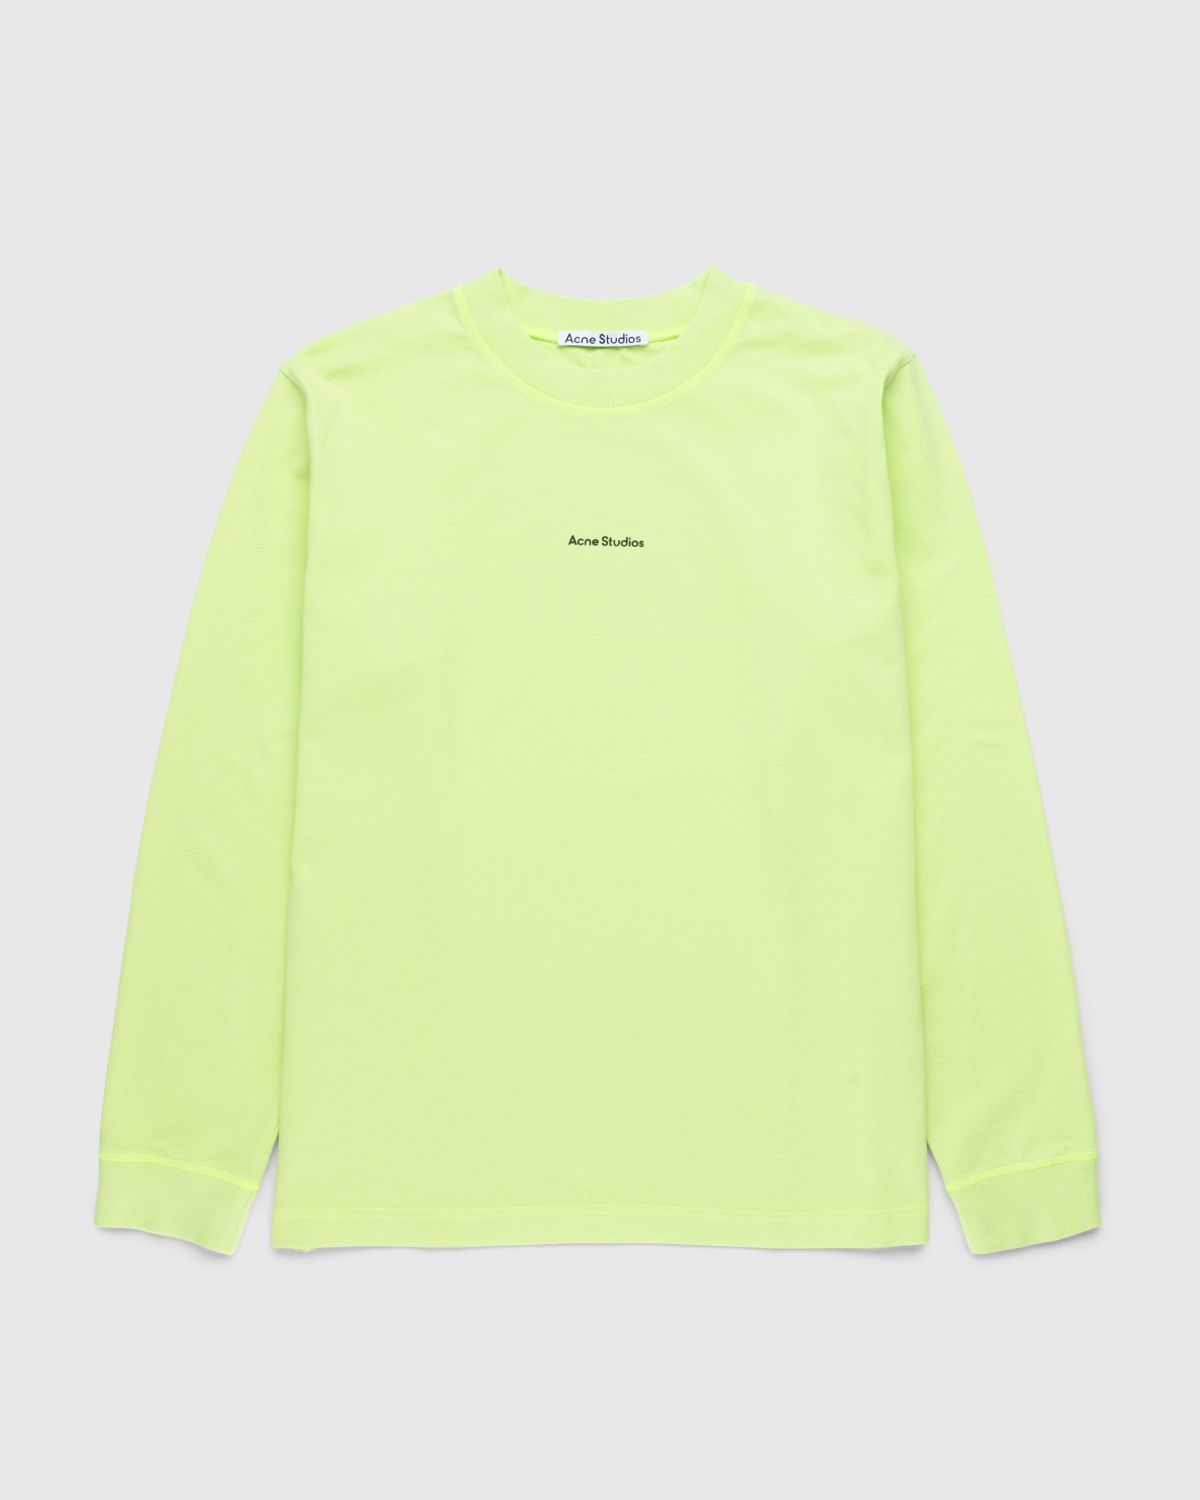 Acne Studios – Organic Cotton Logo Longsleeve T-Shirt Fluo Green - Longsleeves - Green - Image 1